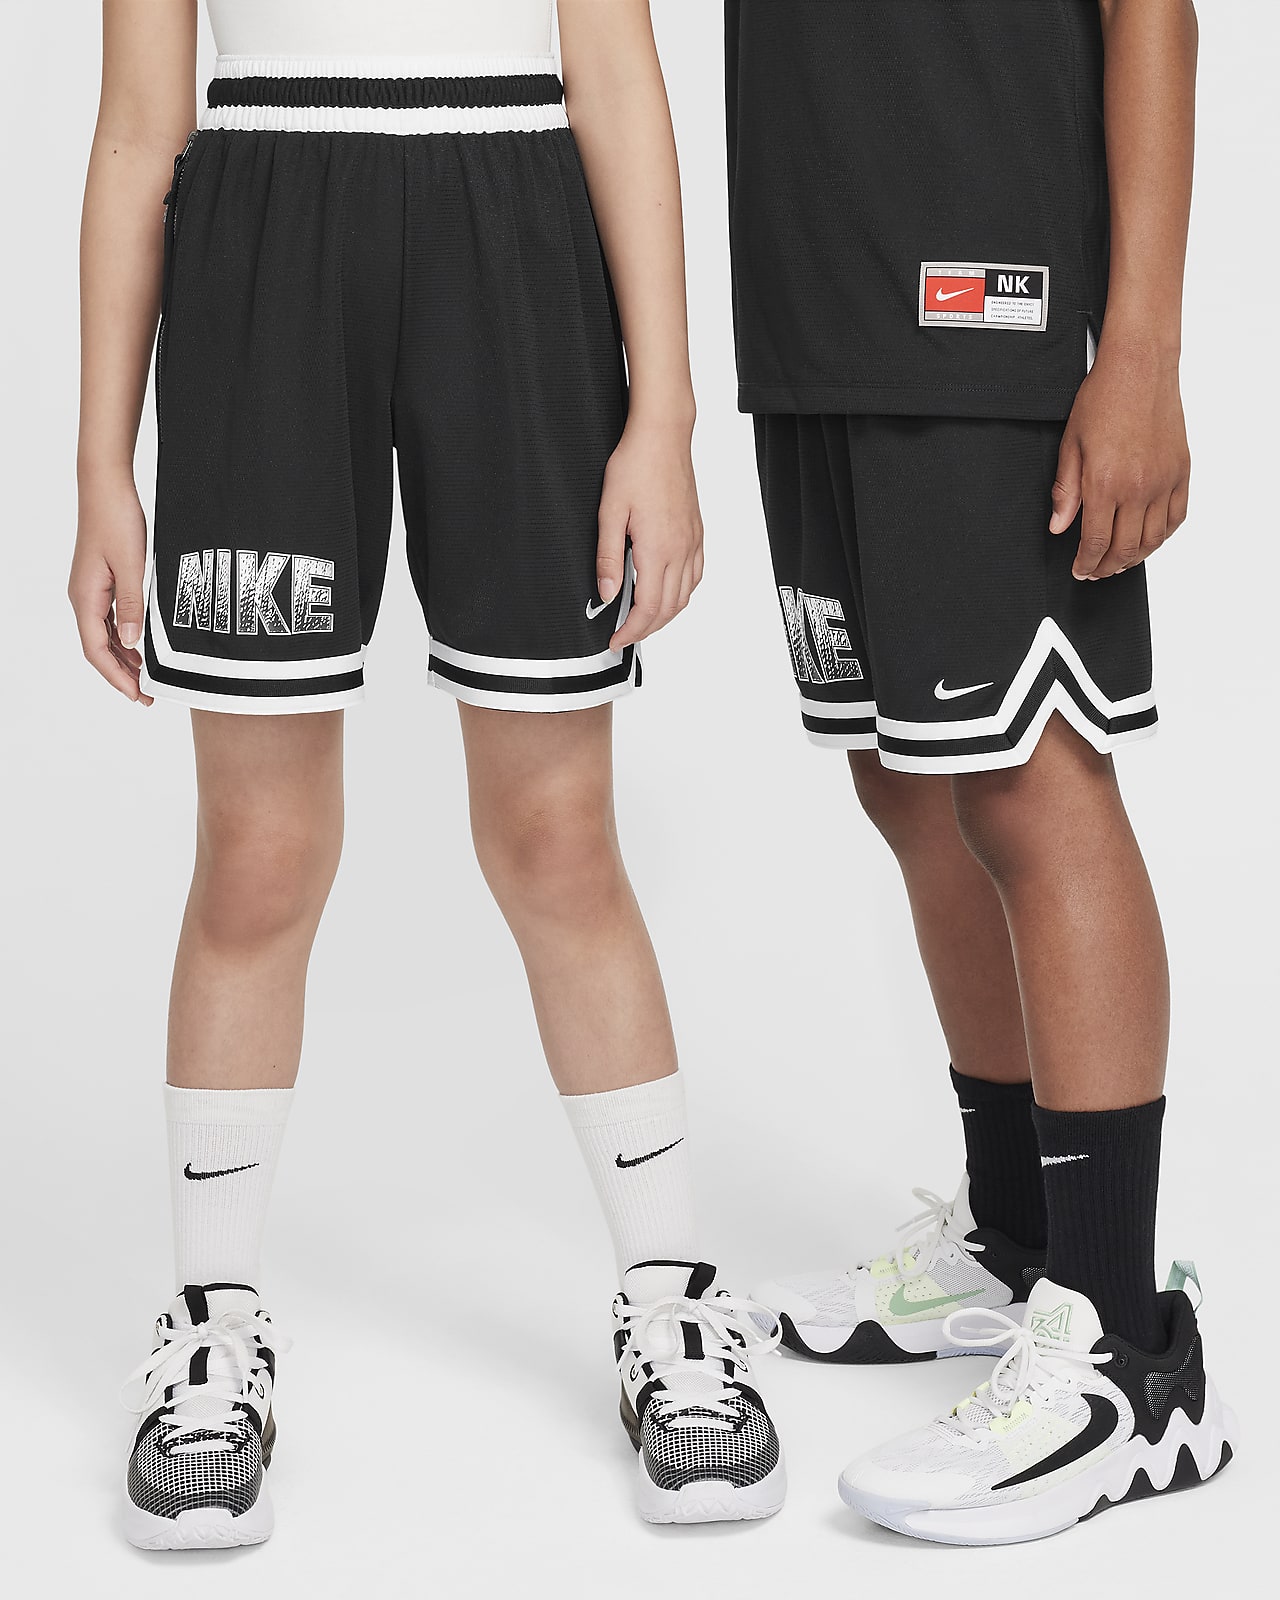 Nike DNA Culture of Basketball Pantalons curts de bàsquet Dri-FIT - Nen/a